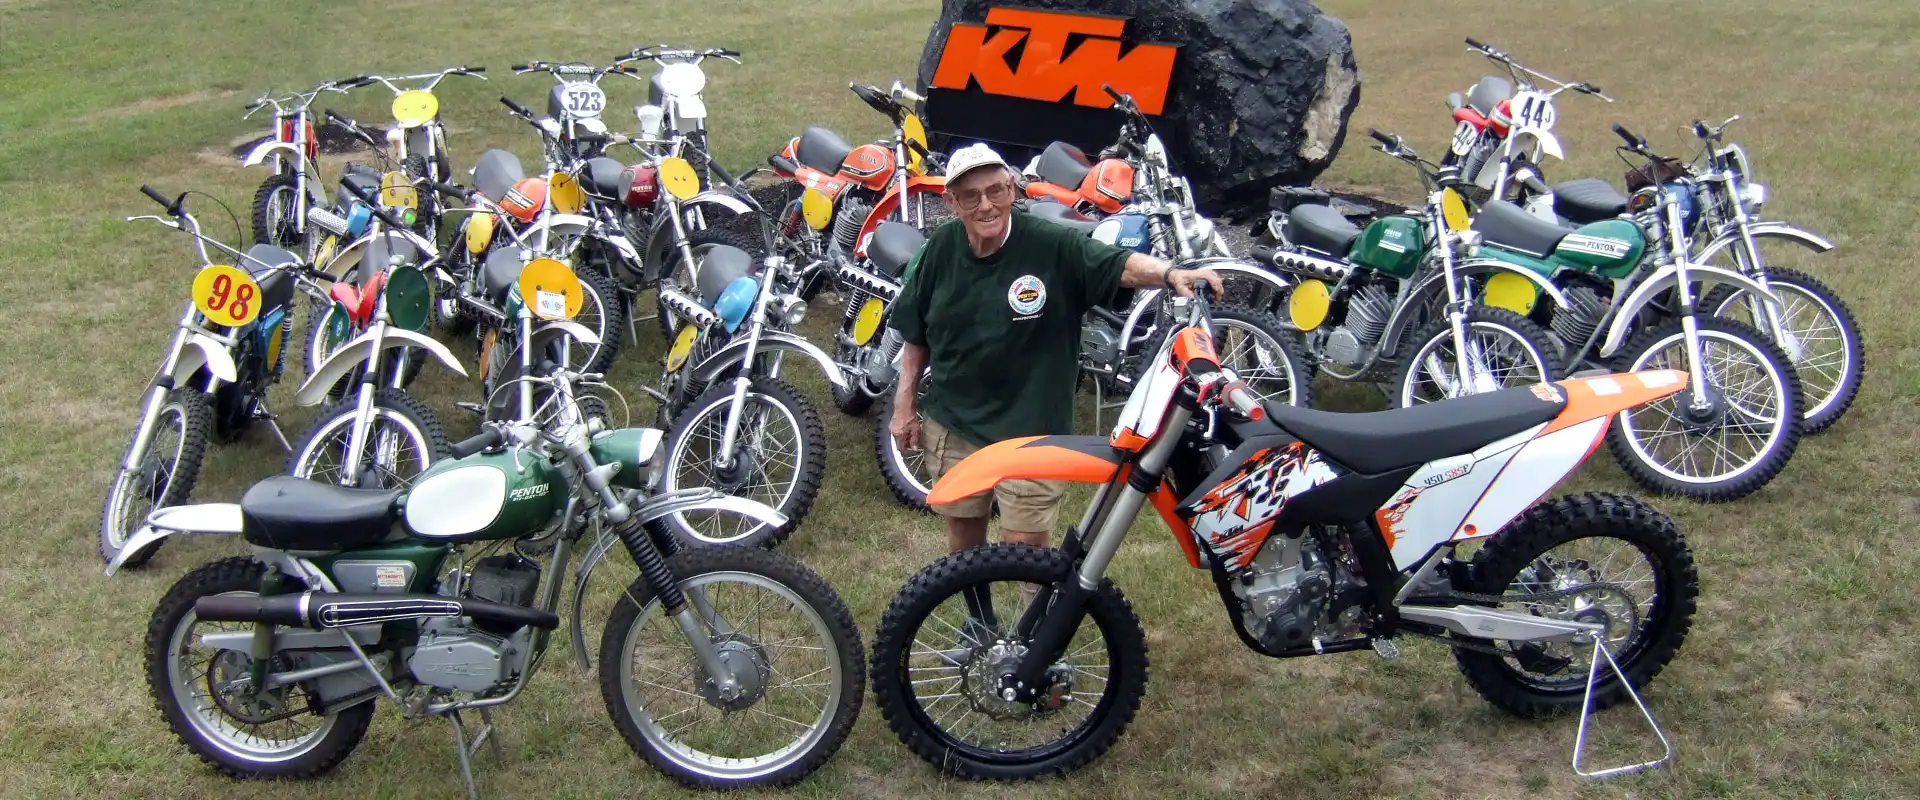 John Penton with Penton and KTM motorcycles